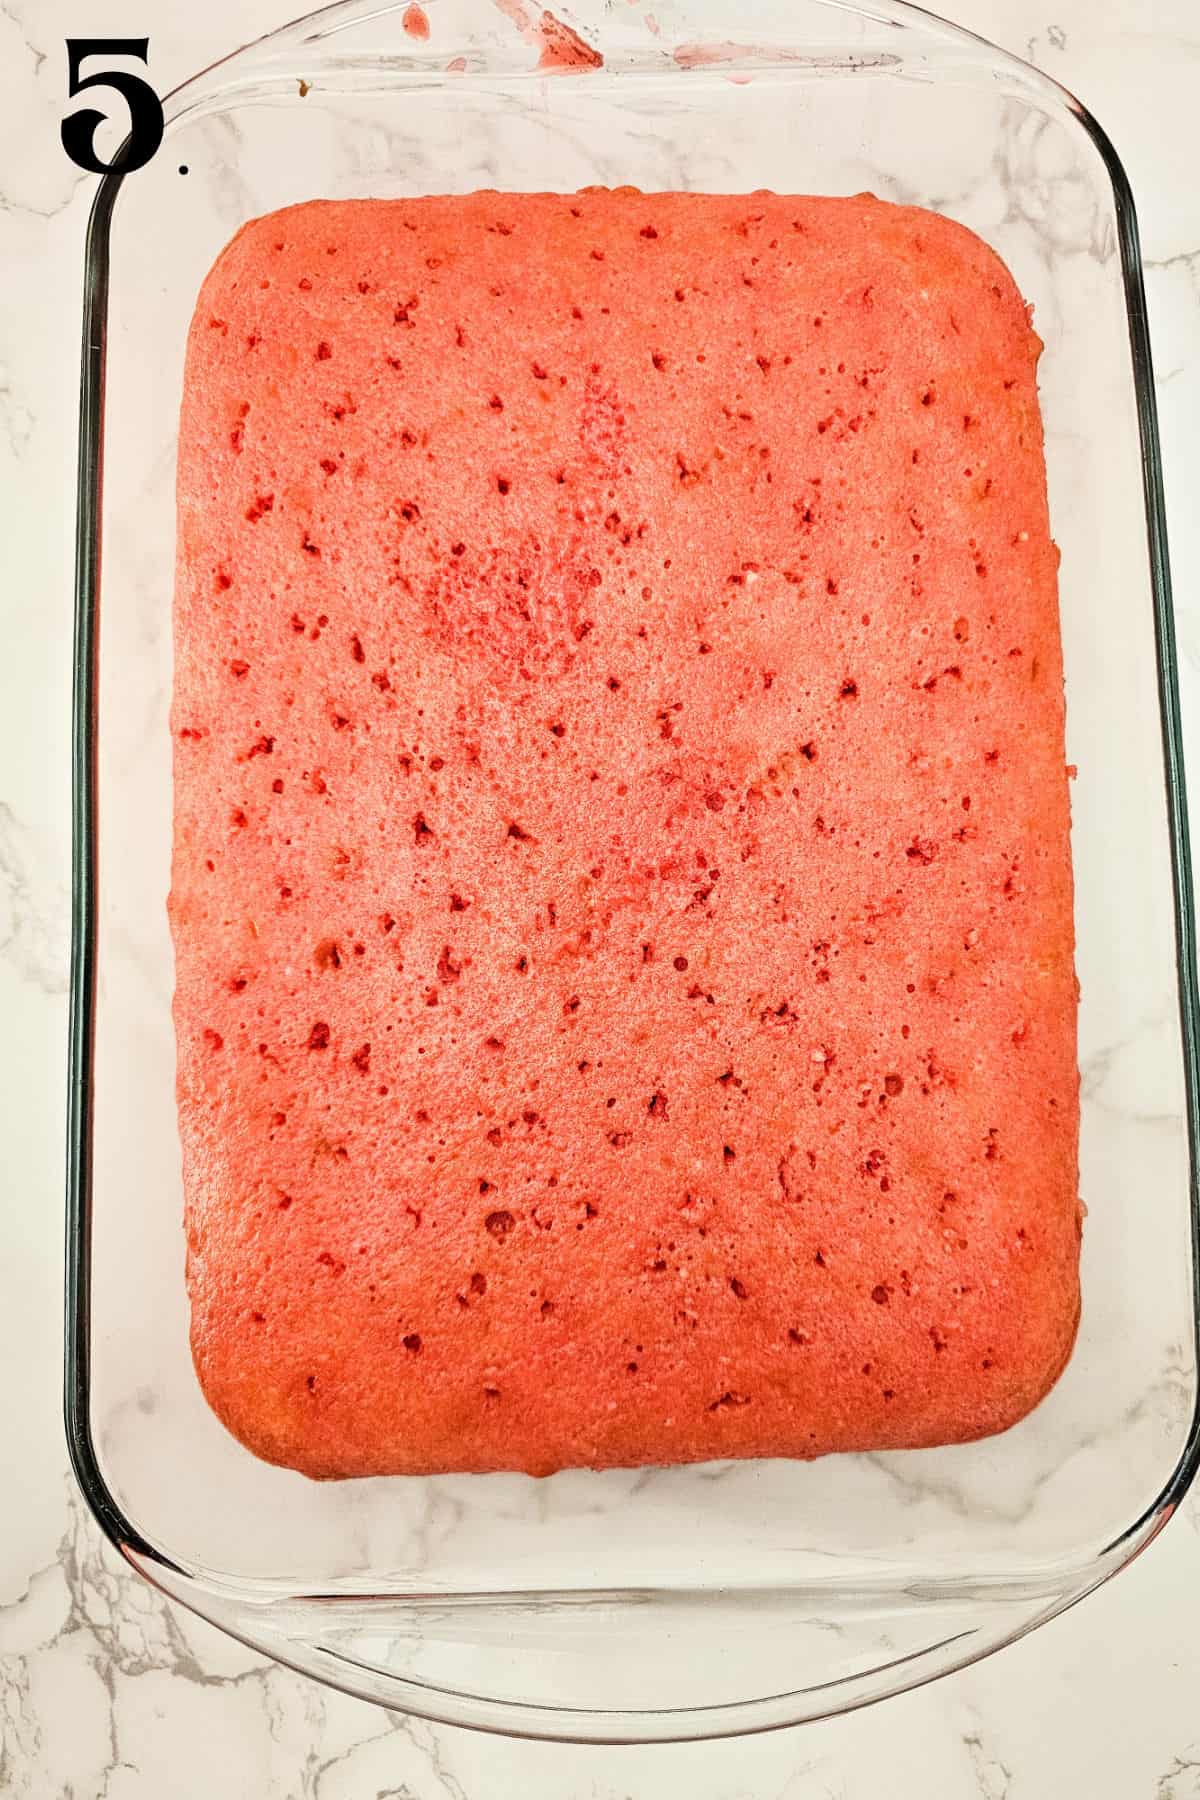 How to Make Cherry Poke Cake - Step 5 jello over cake.